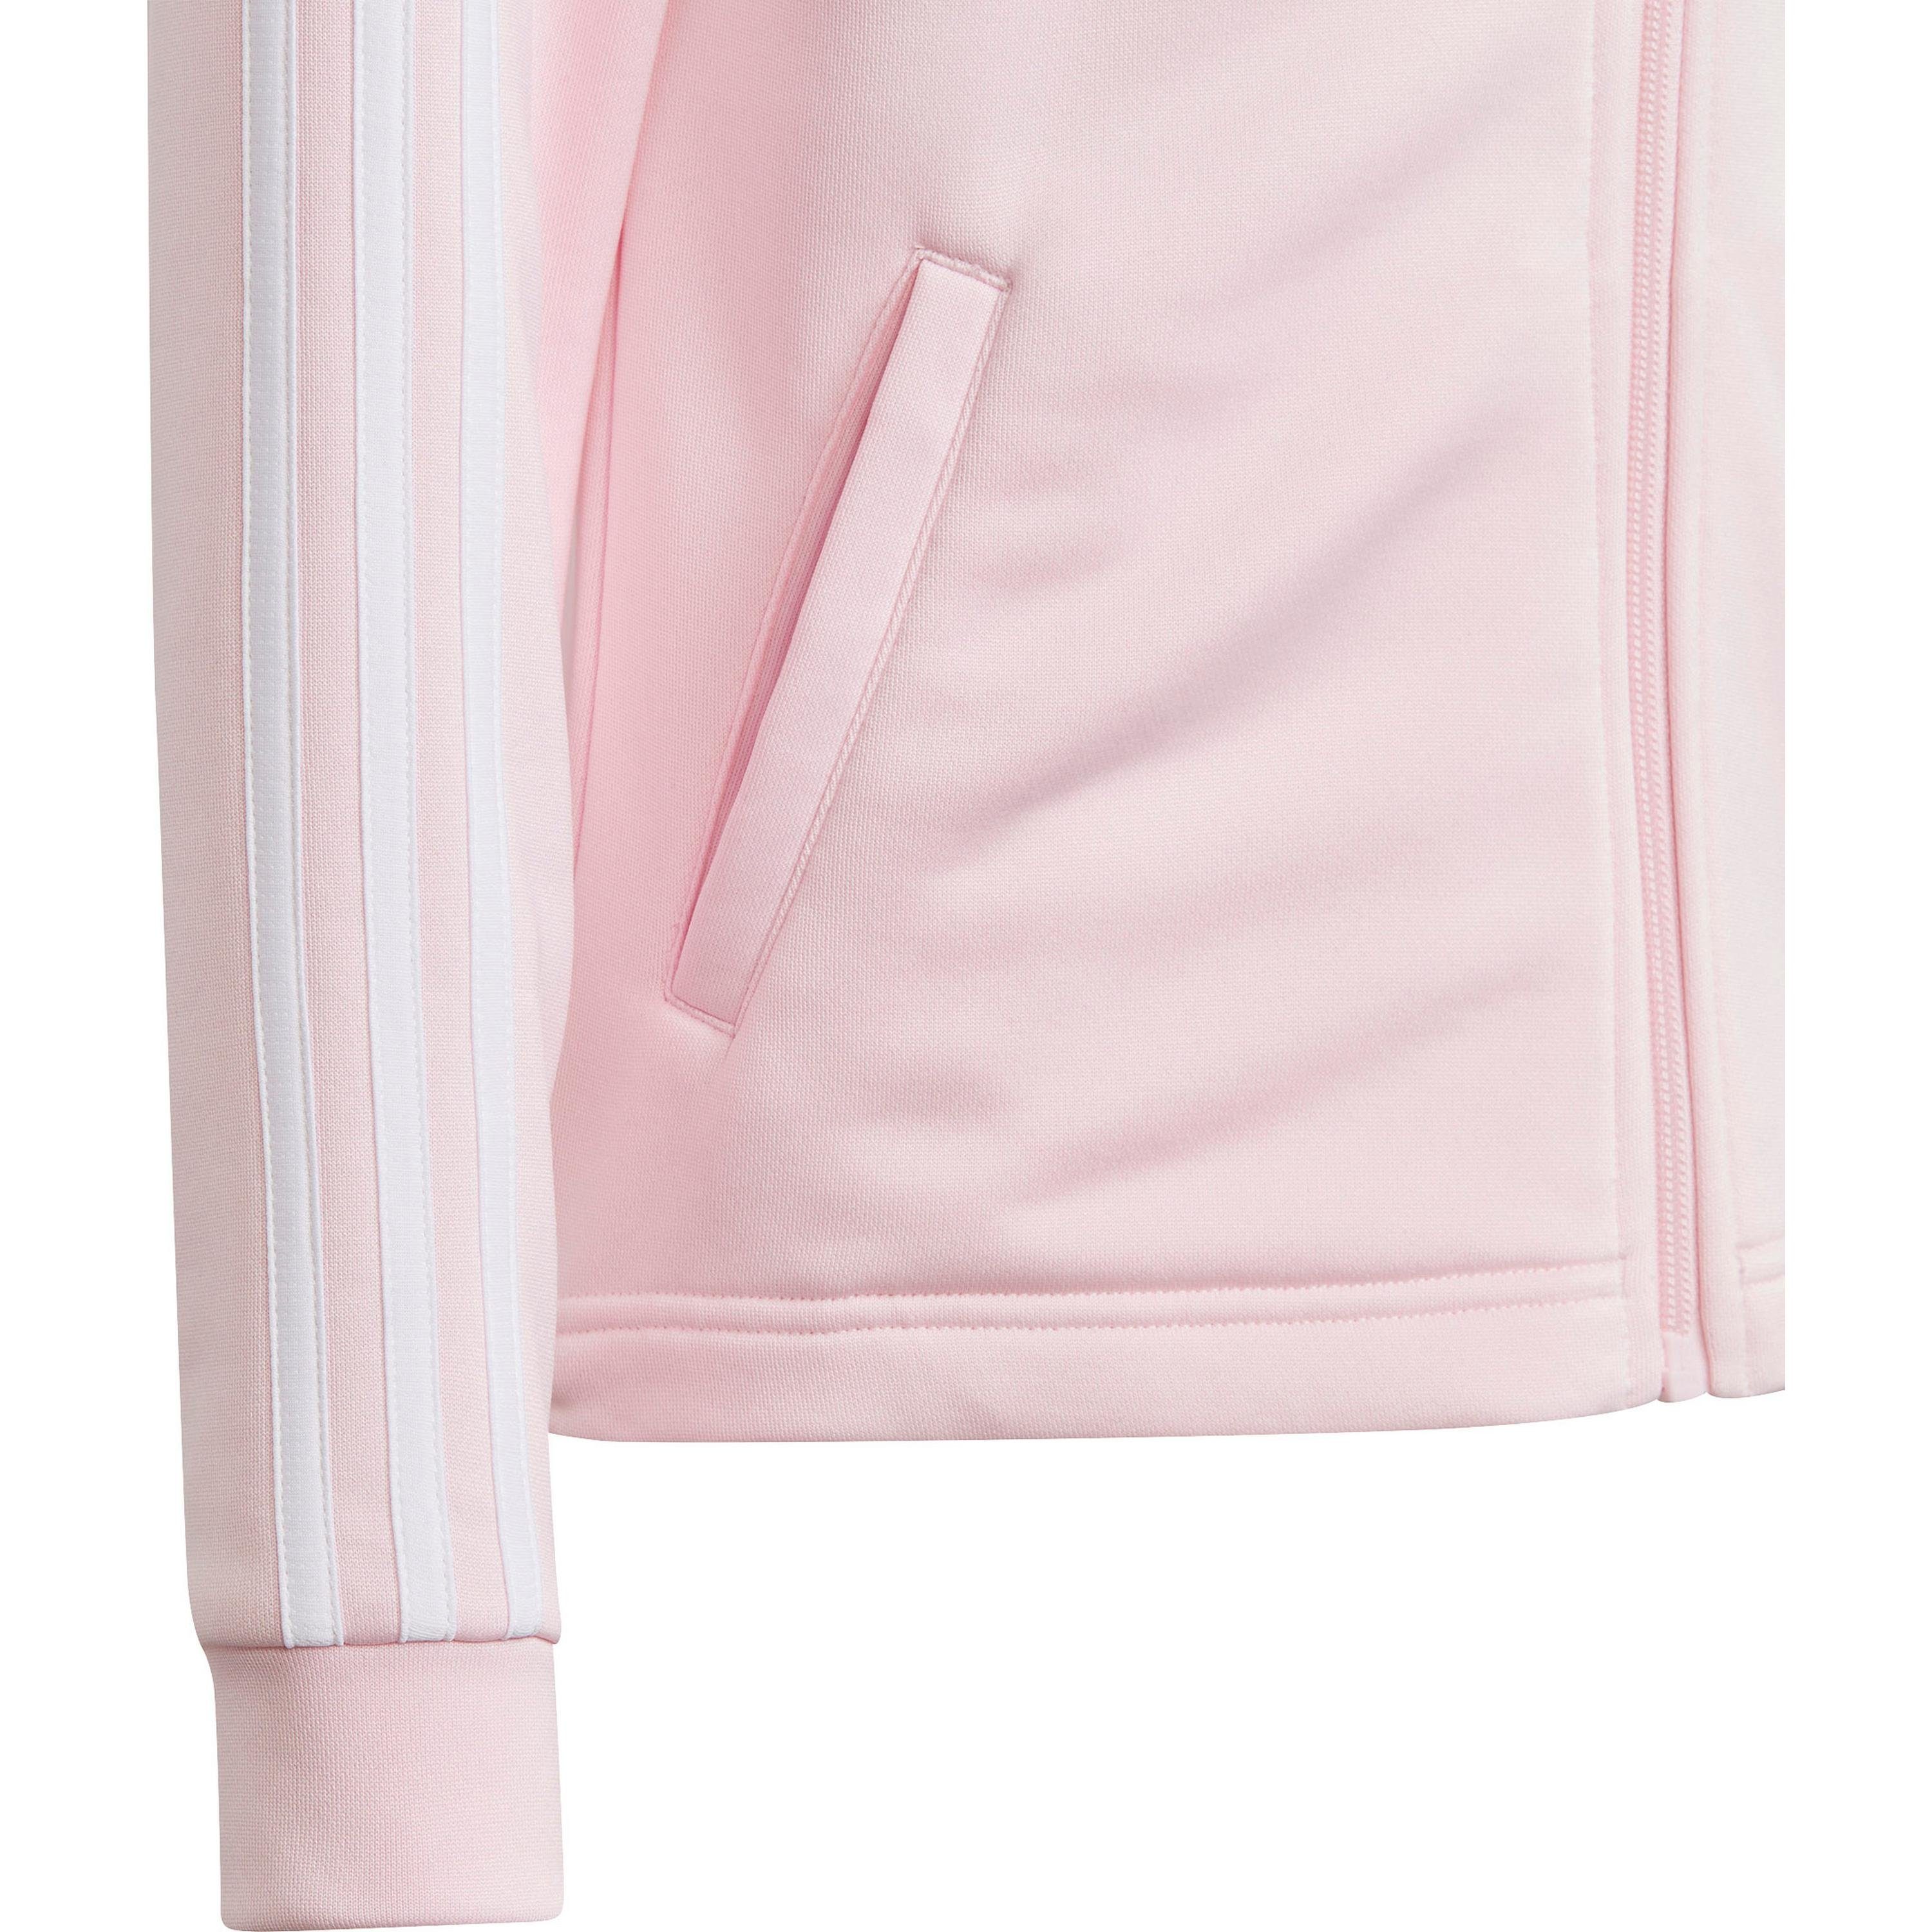 clear Performance Trainingsjacke pink-white adidas